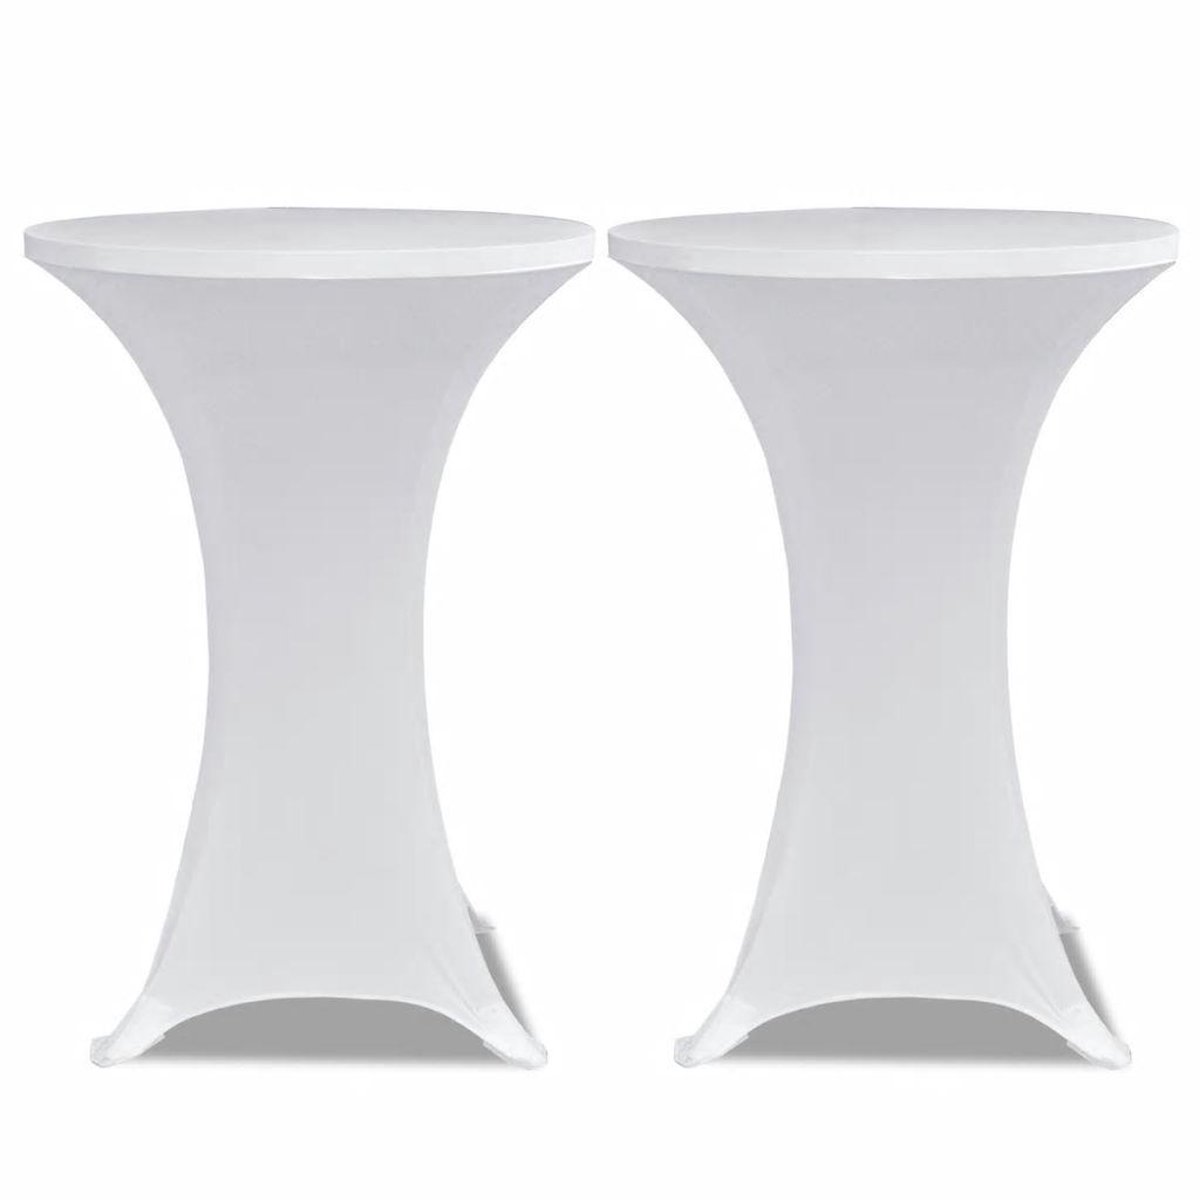 Conjunto de 2 Manteles blancos ajustados para mesa de pie - 70 cm diámetro - Blanco